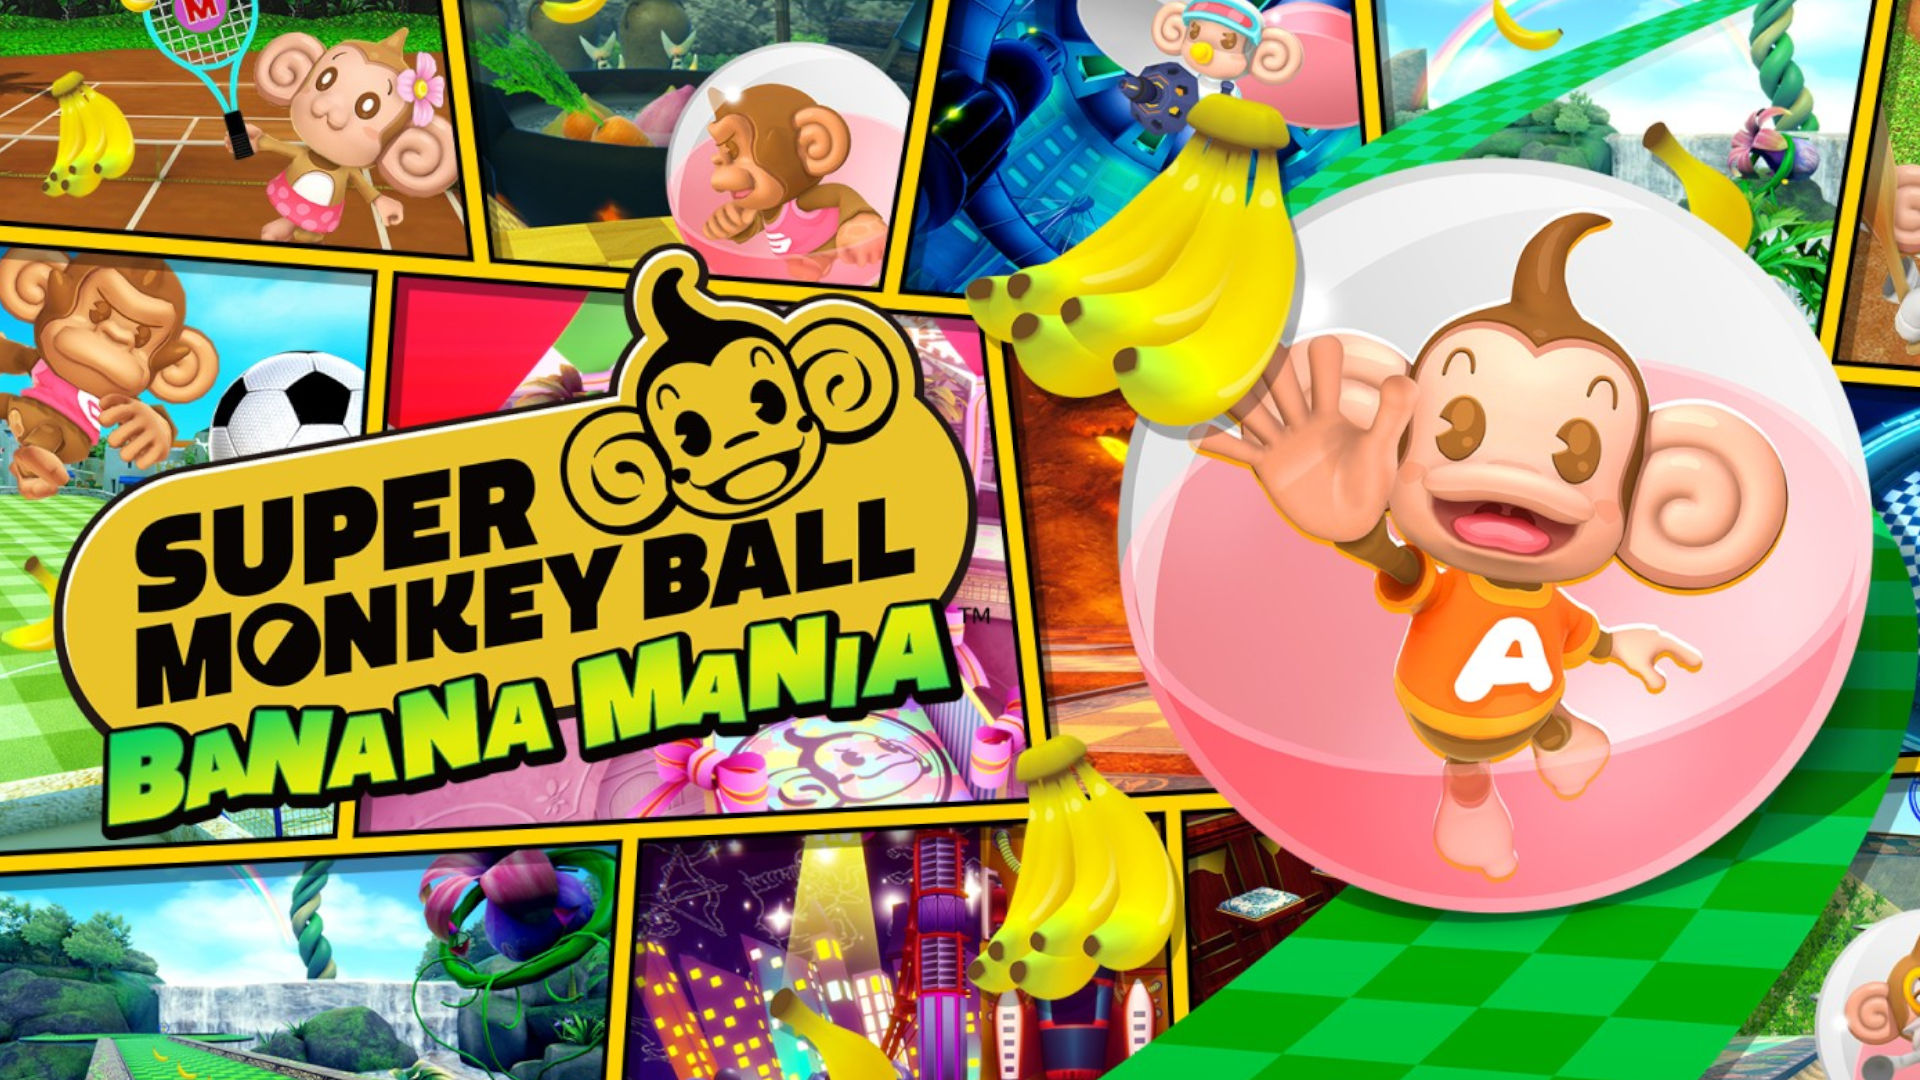 Official art for Super Monkey Ball Banana Mania